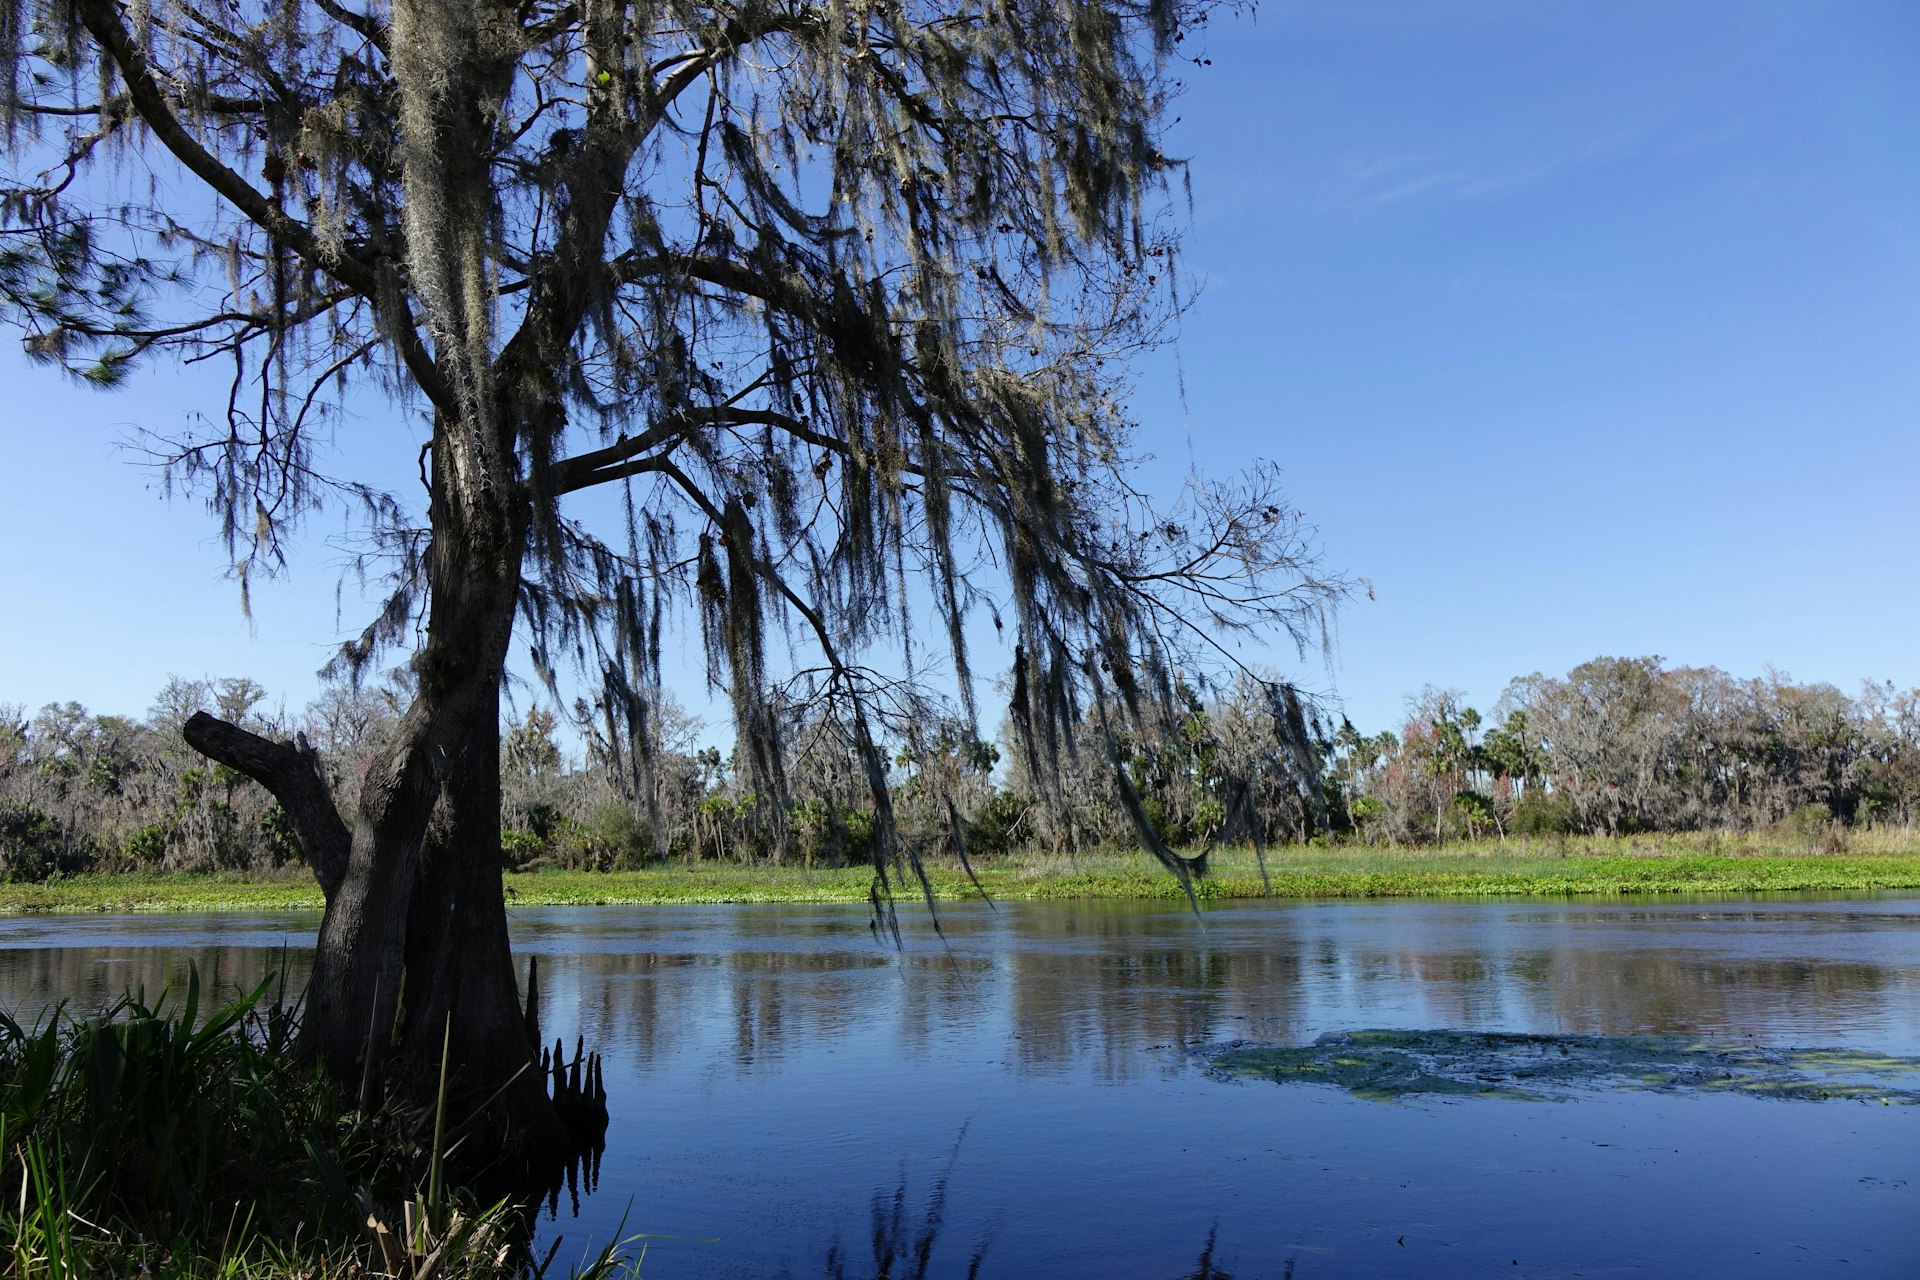 Cypress tree at Katies Landing on the Wekiwa River, Sanford, Florida. The Wekiwa has been designated a National Wild and Scenic River